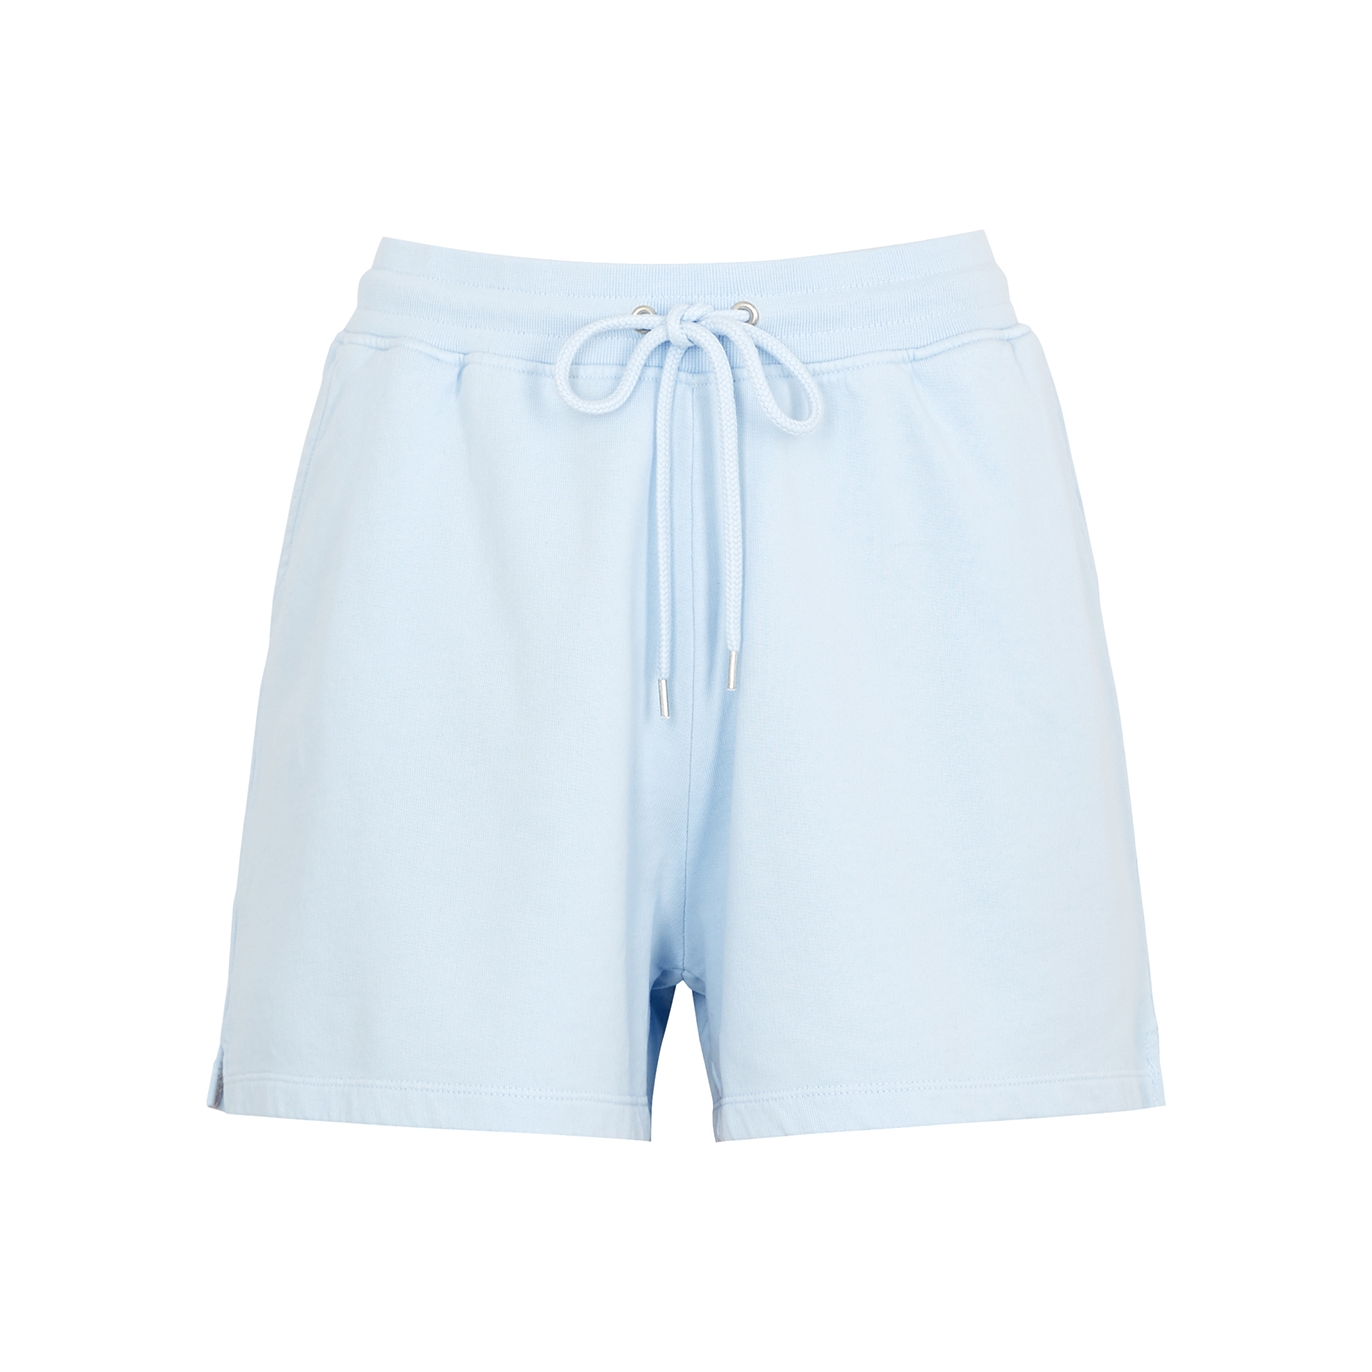 Colorful Standard Light Blue Cotton Shorts